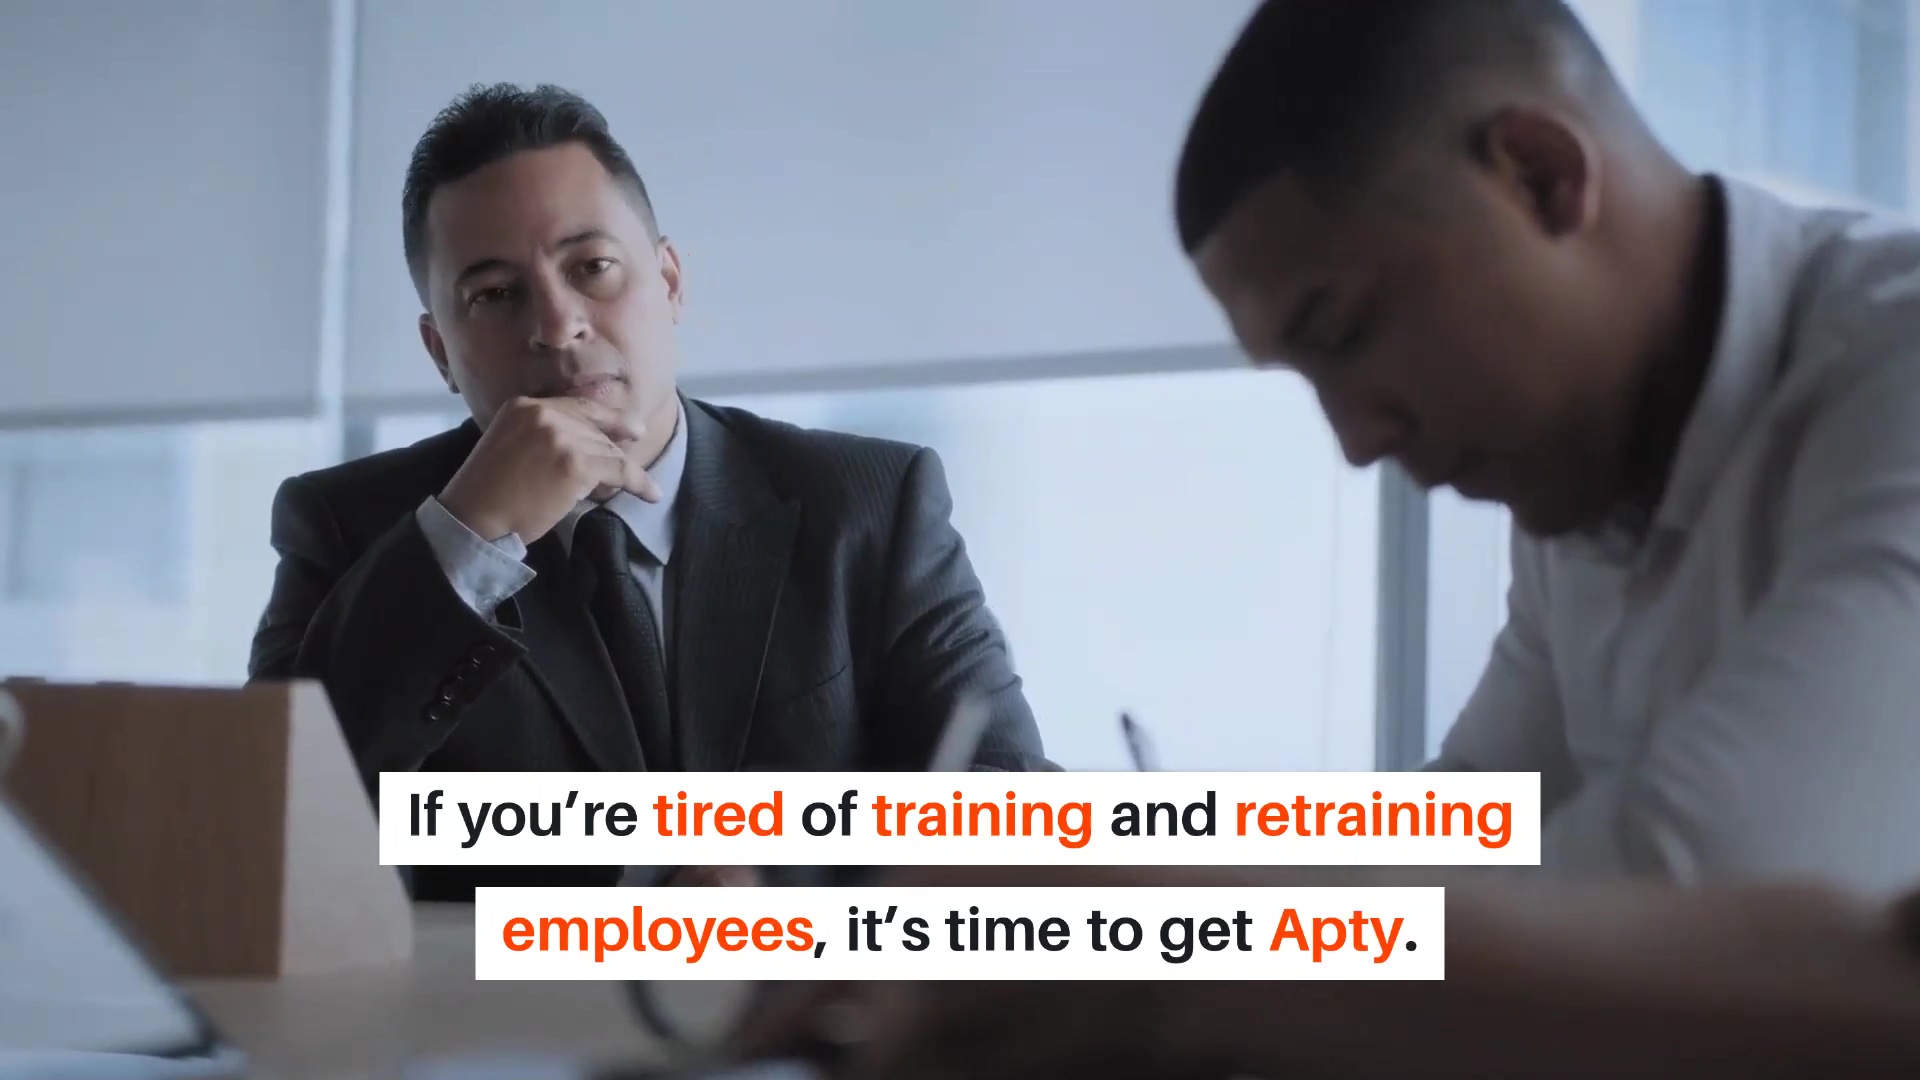 Training and retraining employees